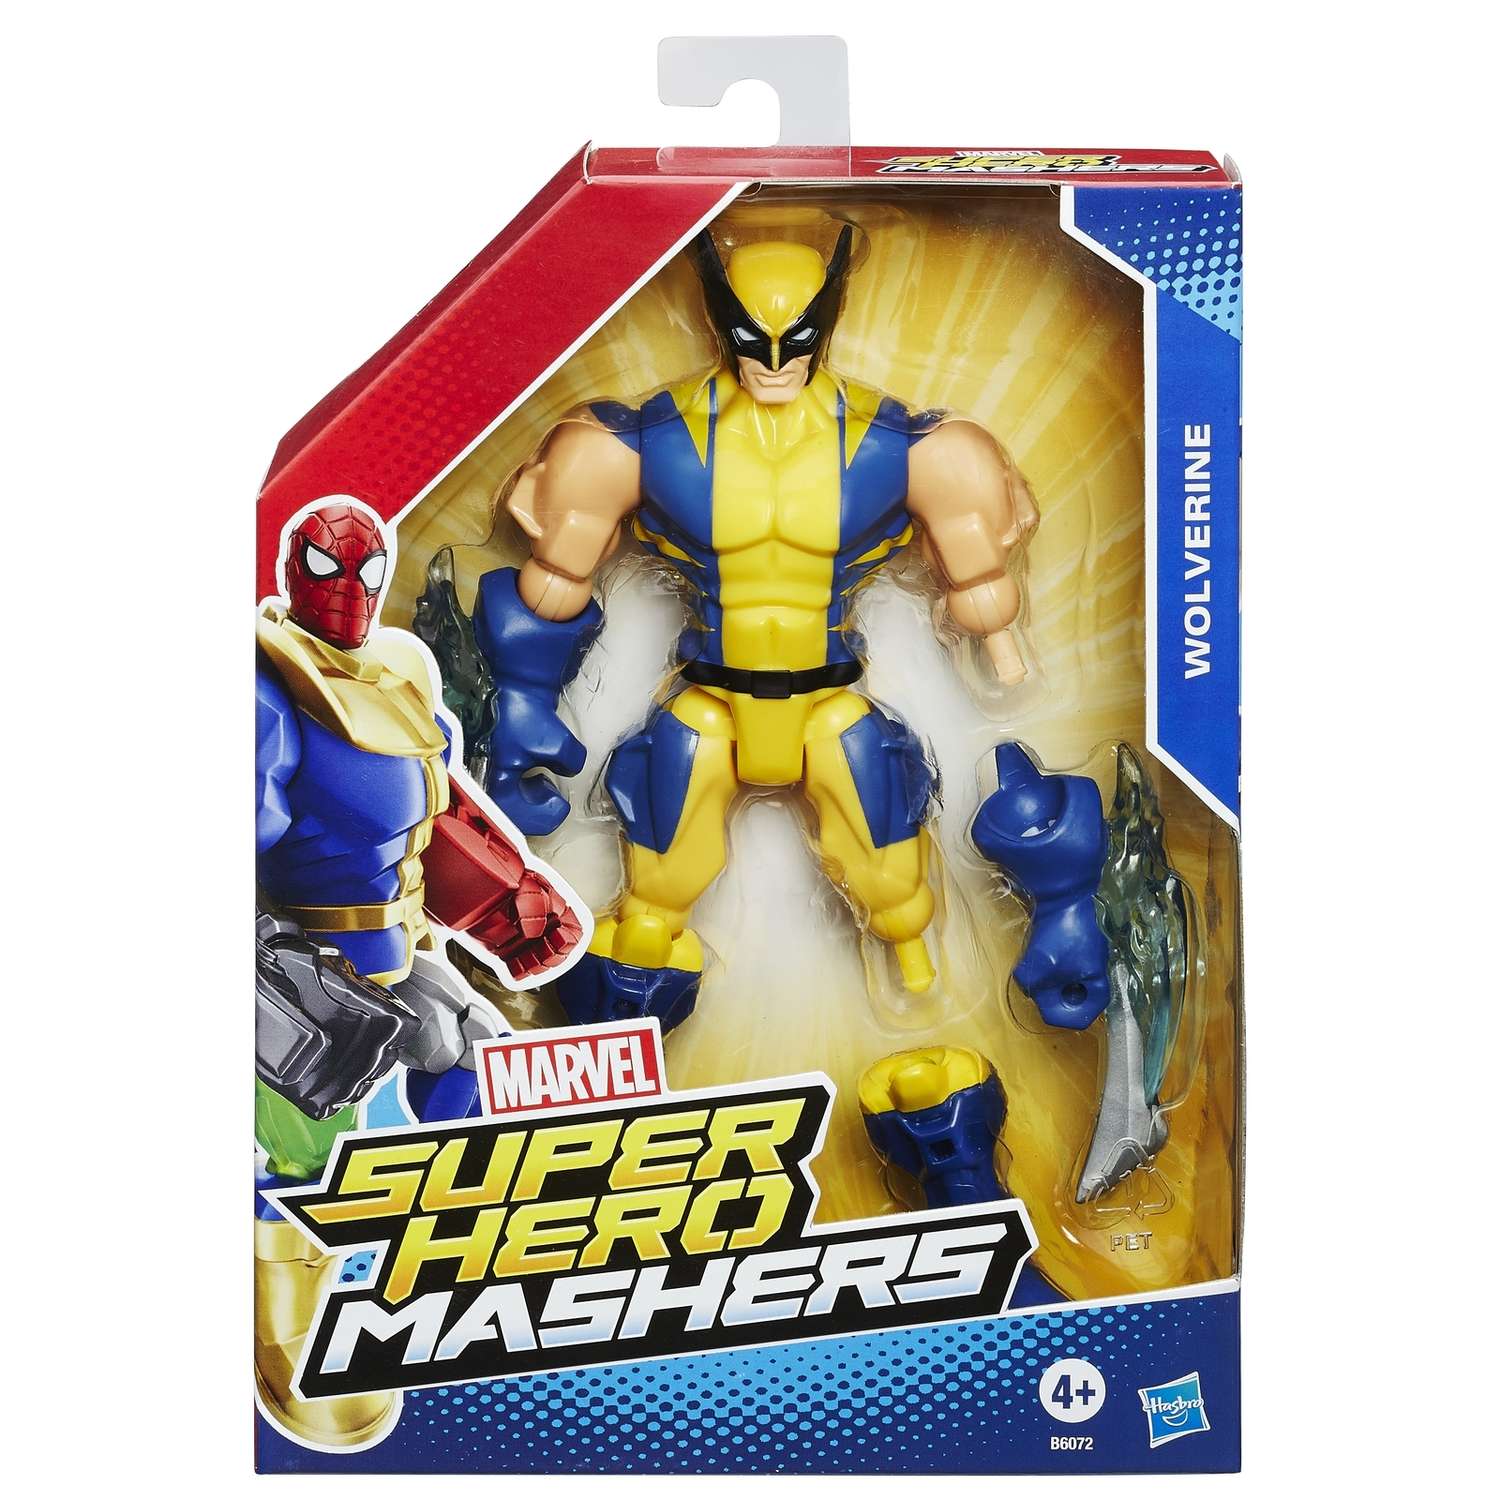 Разборные фигурки HEROMASHERS Super Hero Mashers в ассортименте - фото 51